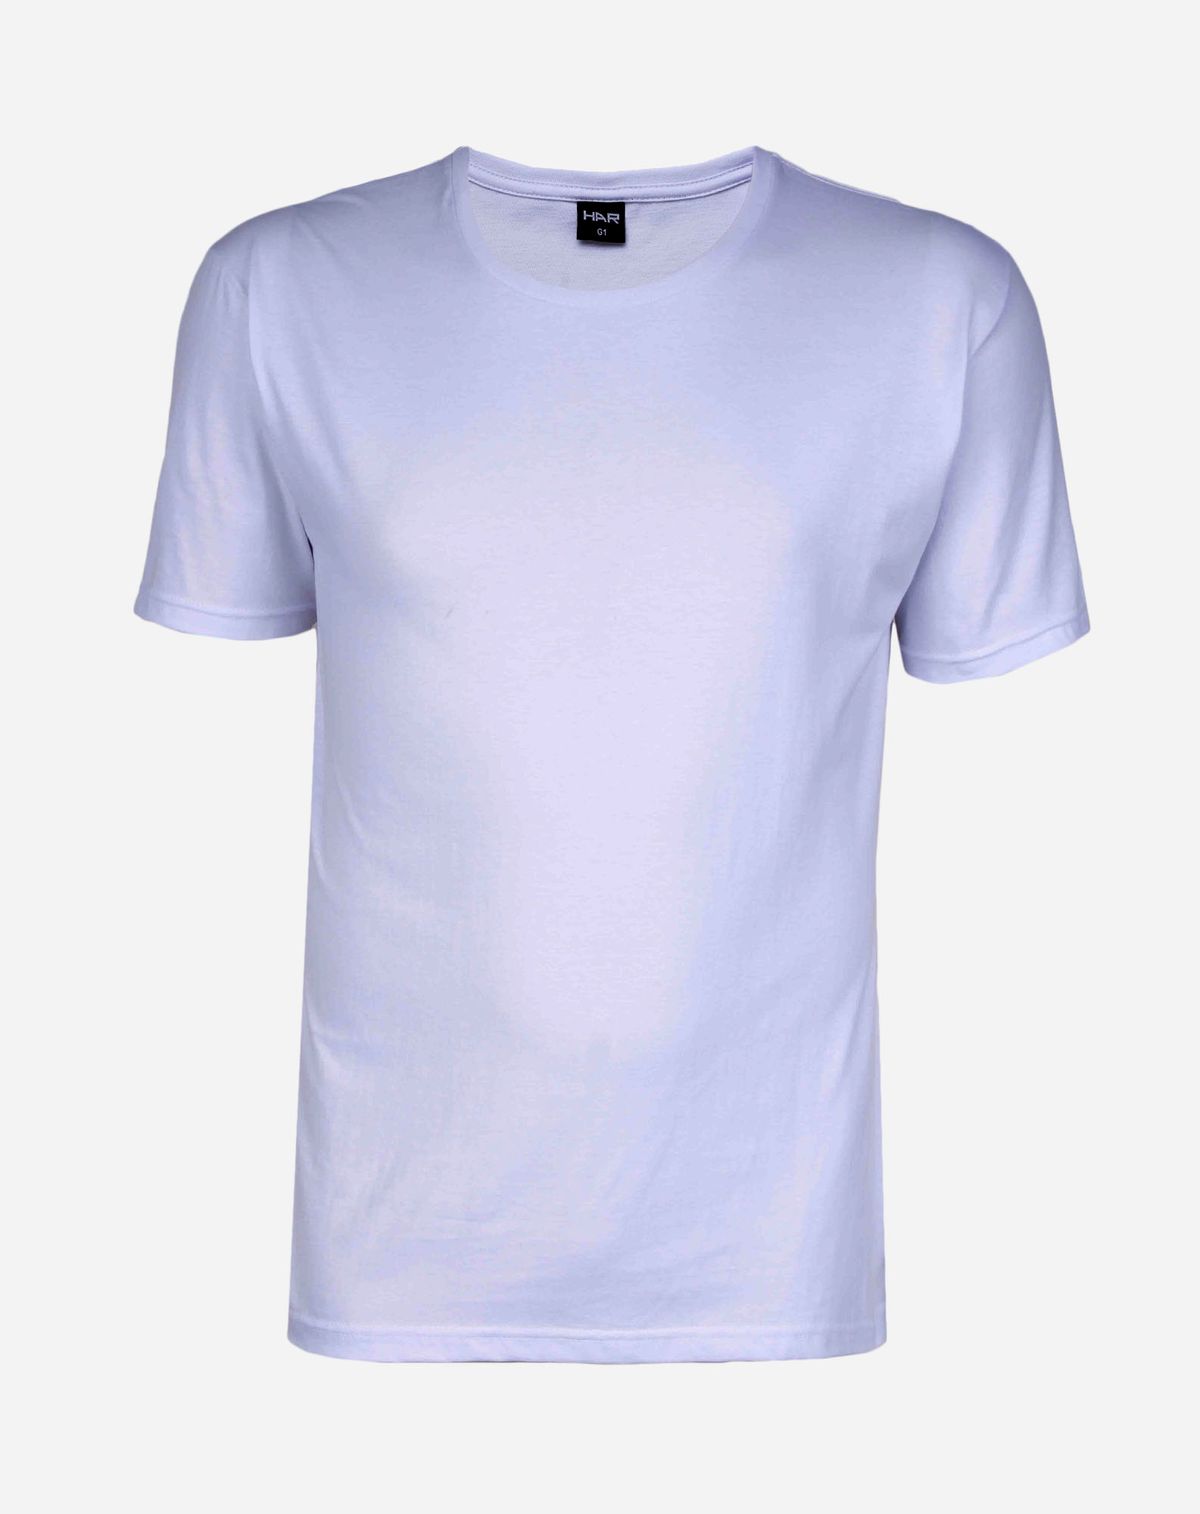 693257004-camiseta-plus-size-manga-curta-masculina-basica-branco-g1-f28